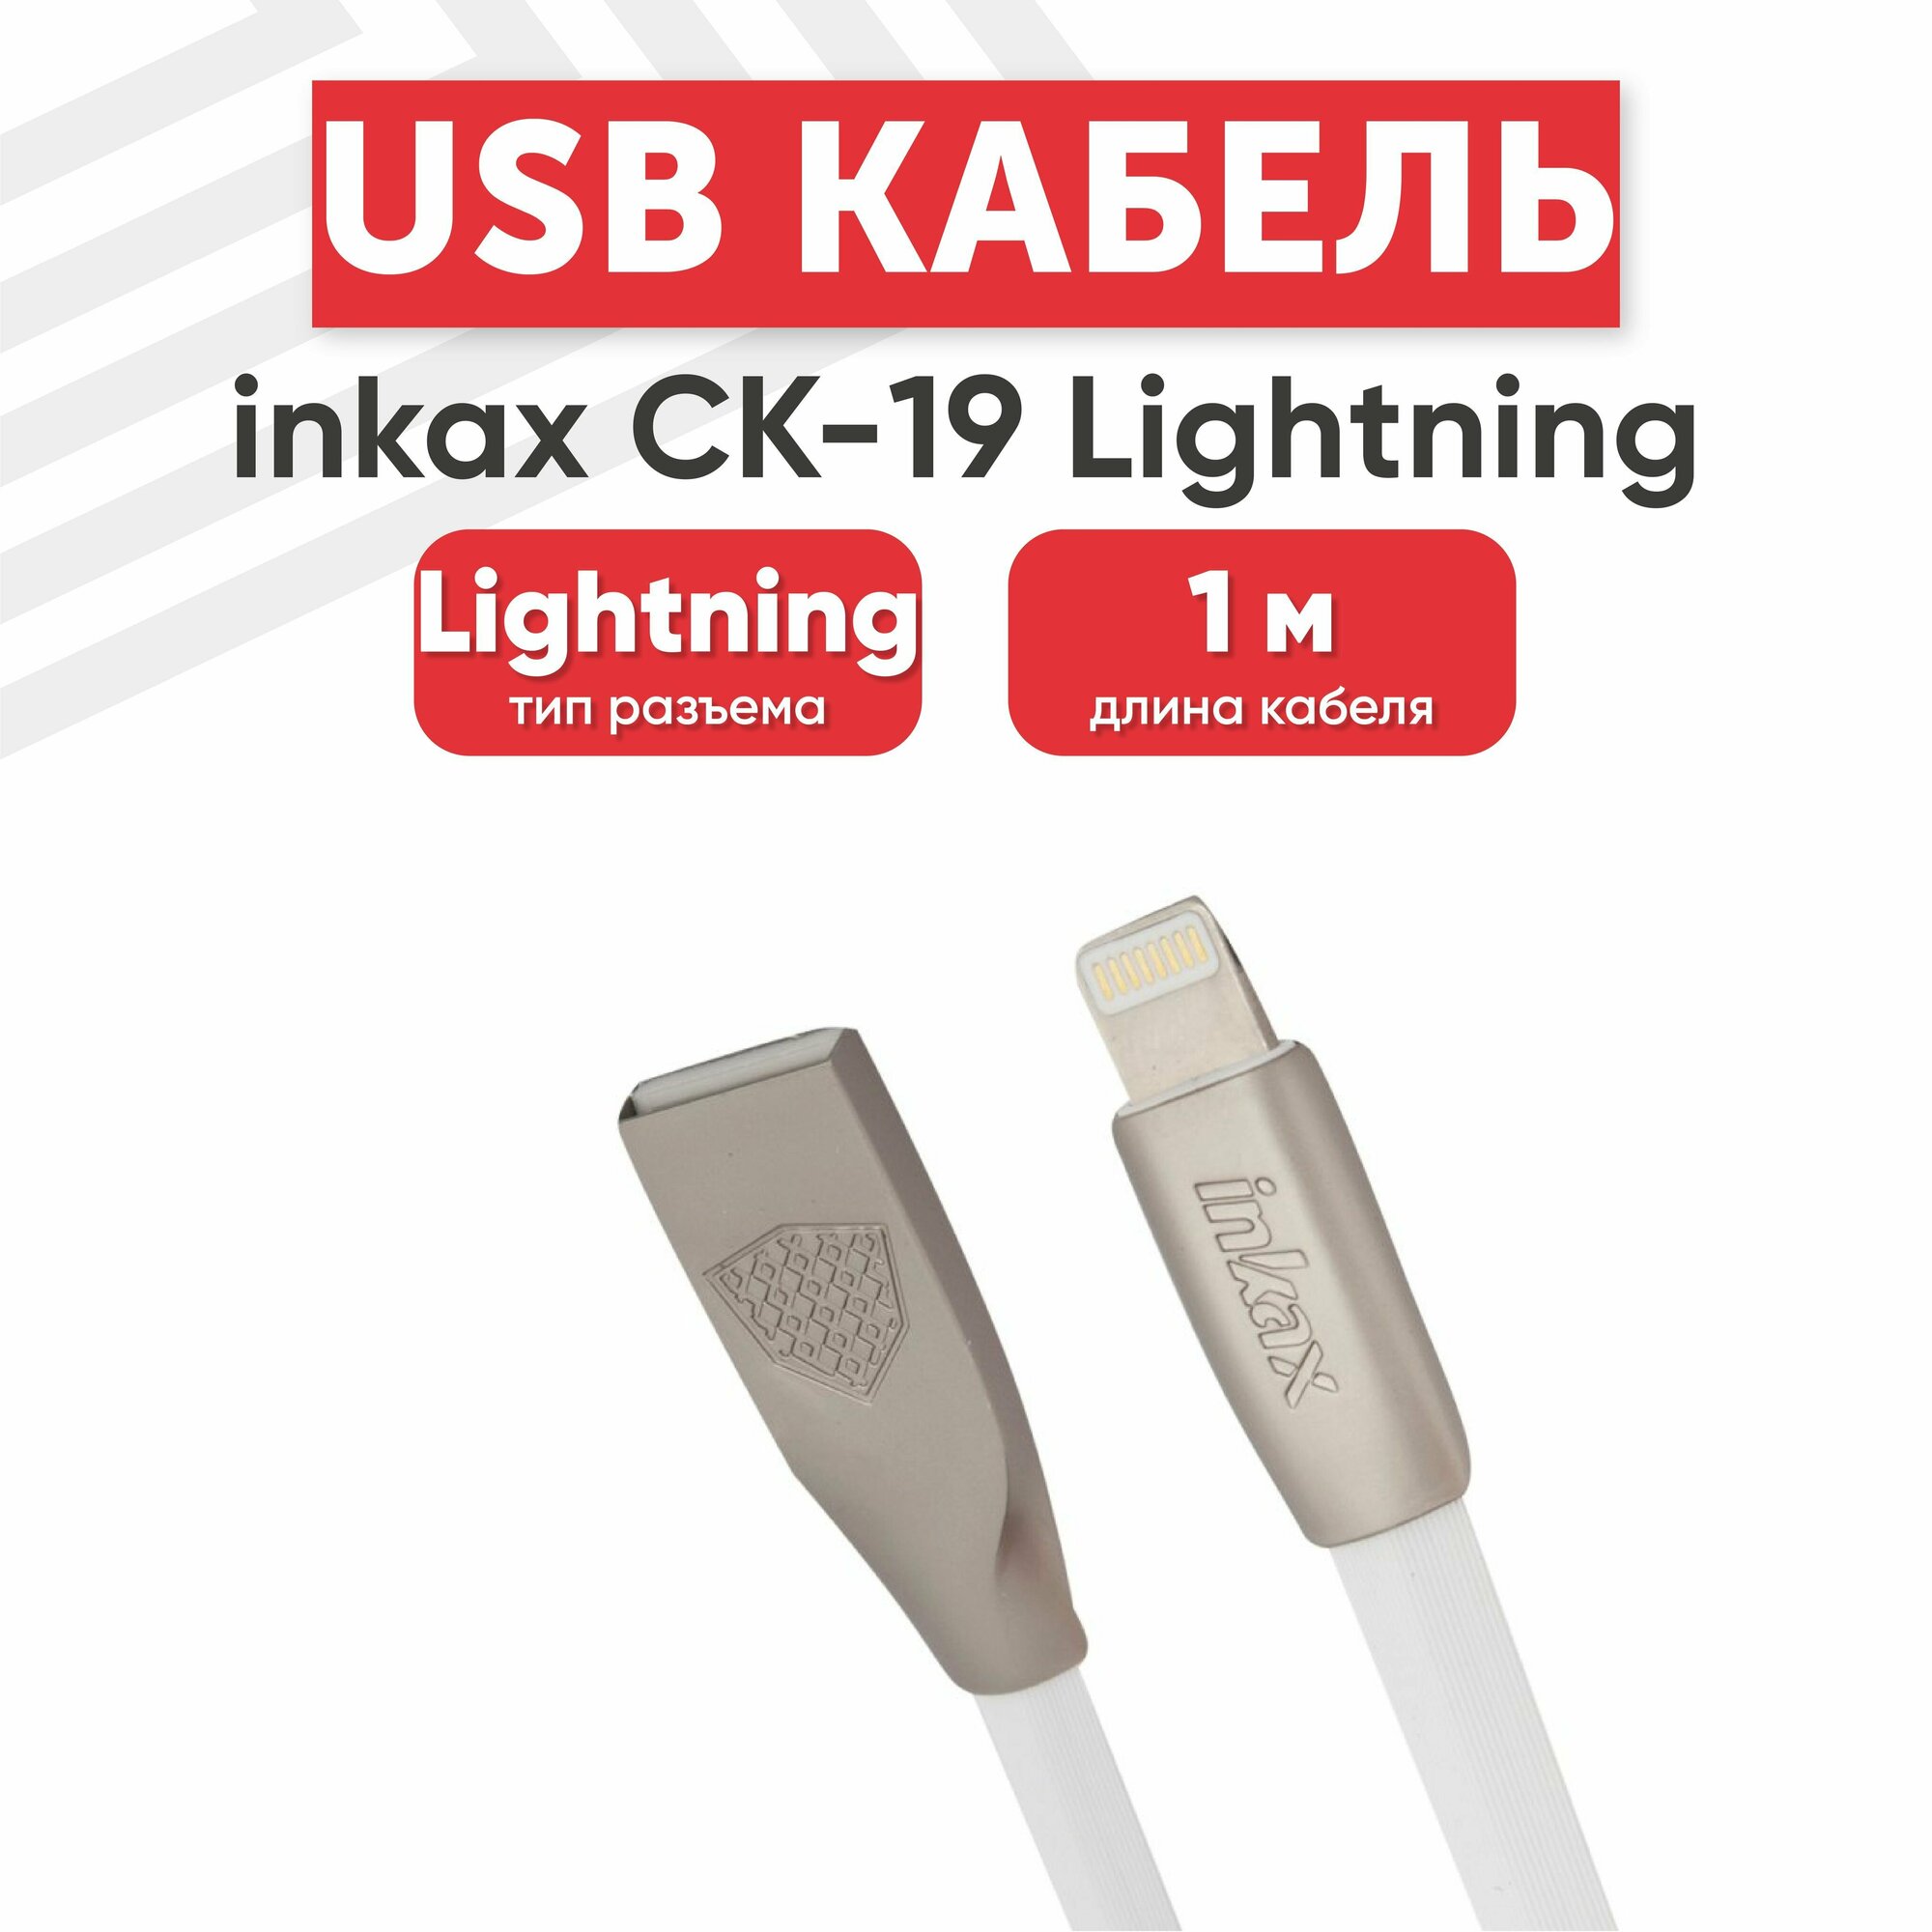 USB кабель inkax CK-19 для зарядки, передачи данных, Lightning 8-pin, 2.1А, 1 метр, TPE, белый